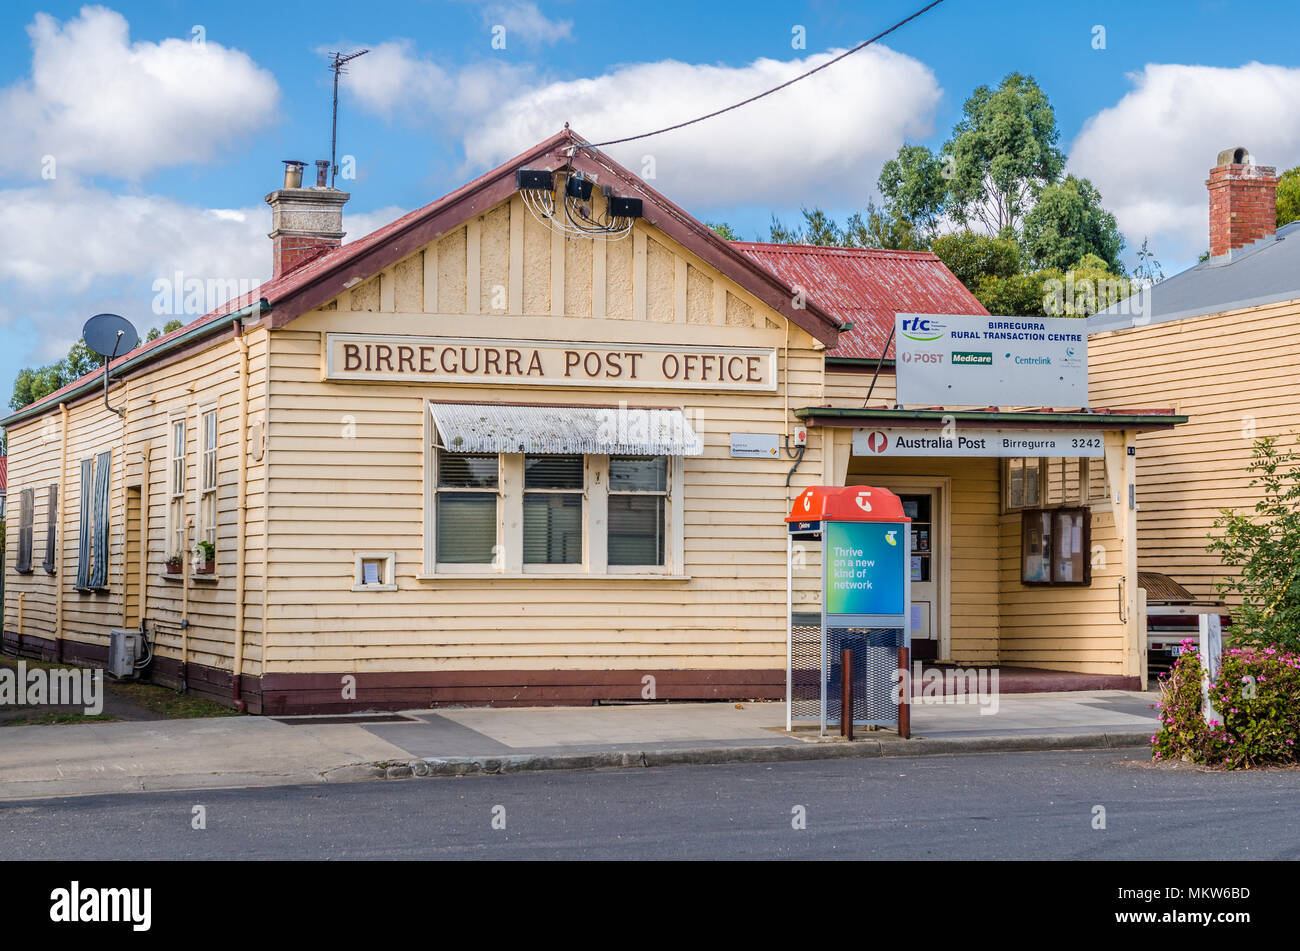 Birregurra Post Office, Birregurra, Victoria, Australia Stock Photo